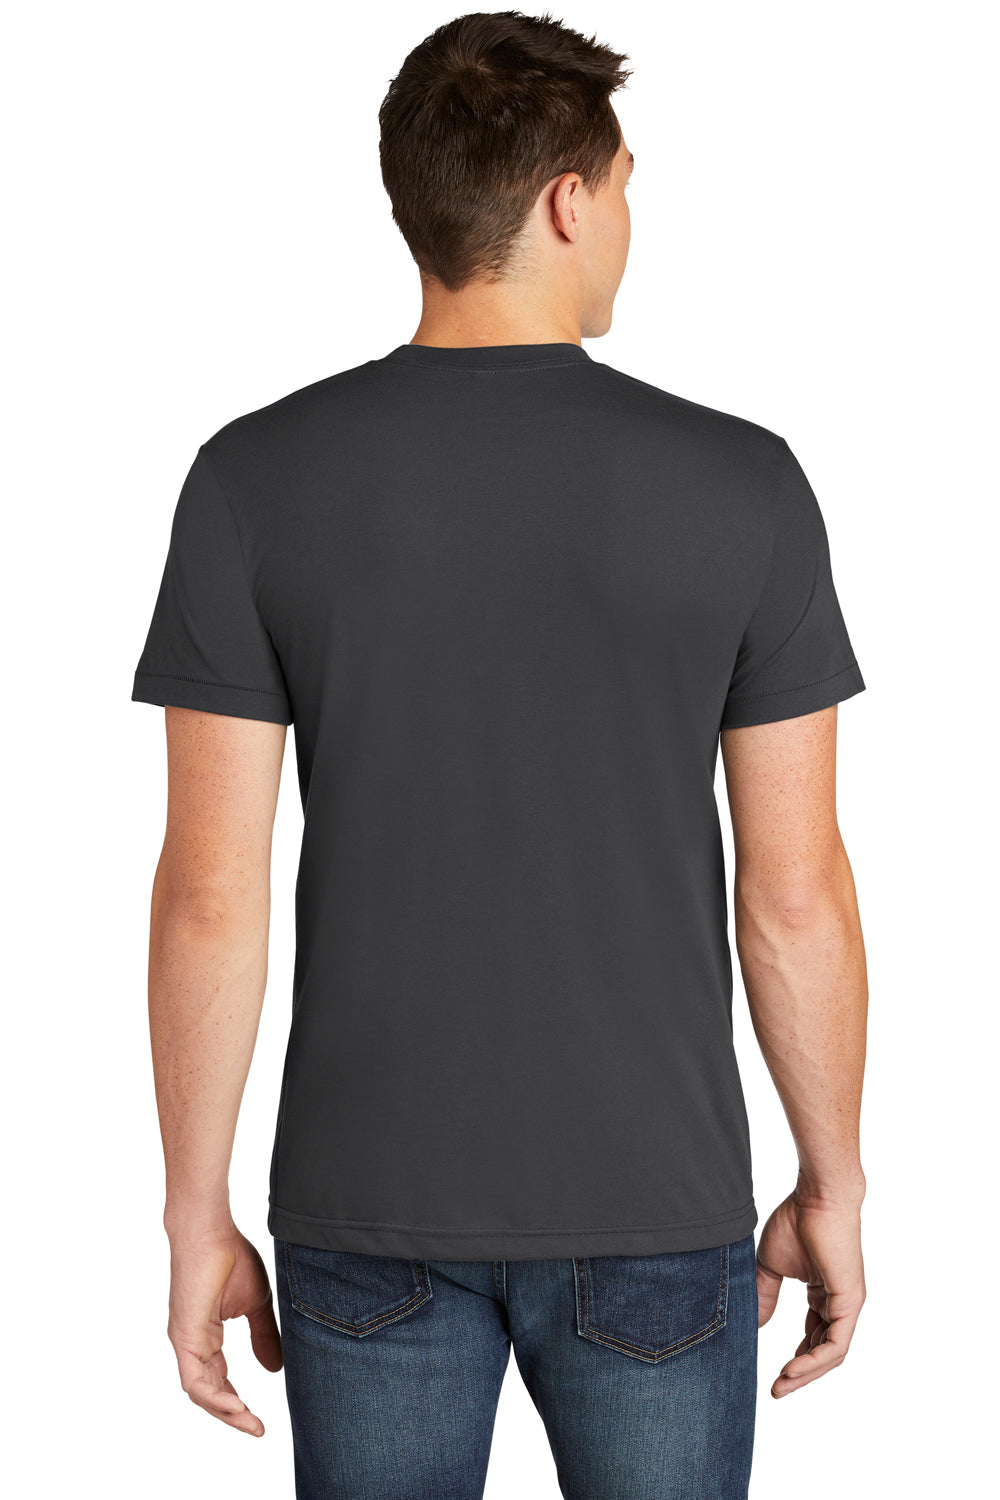 American Apparel BB401W Mens Short Sleeve Crewneck T-Shirt Asphalt Grey Back